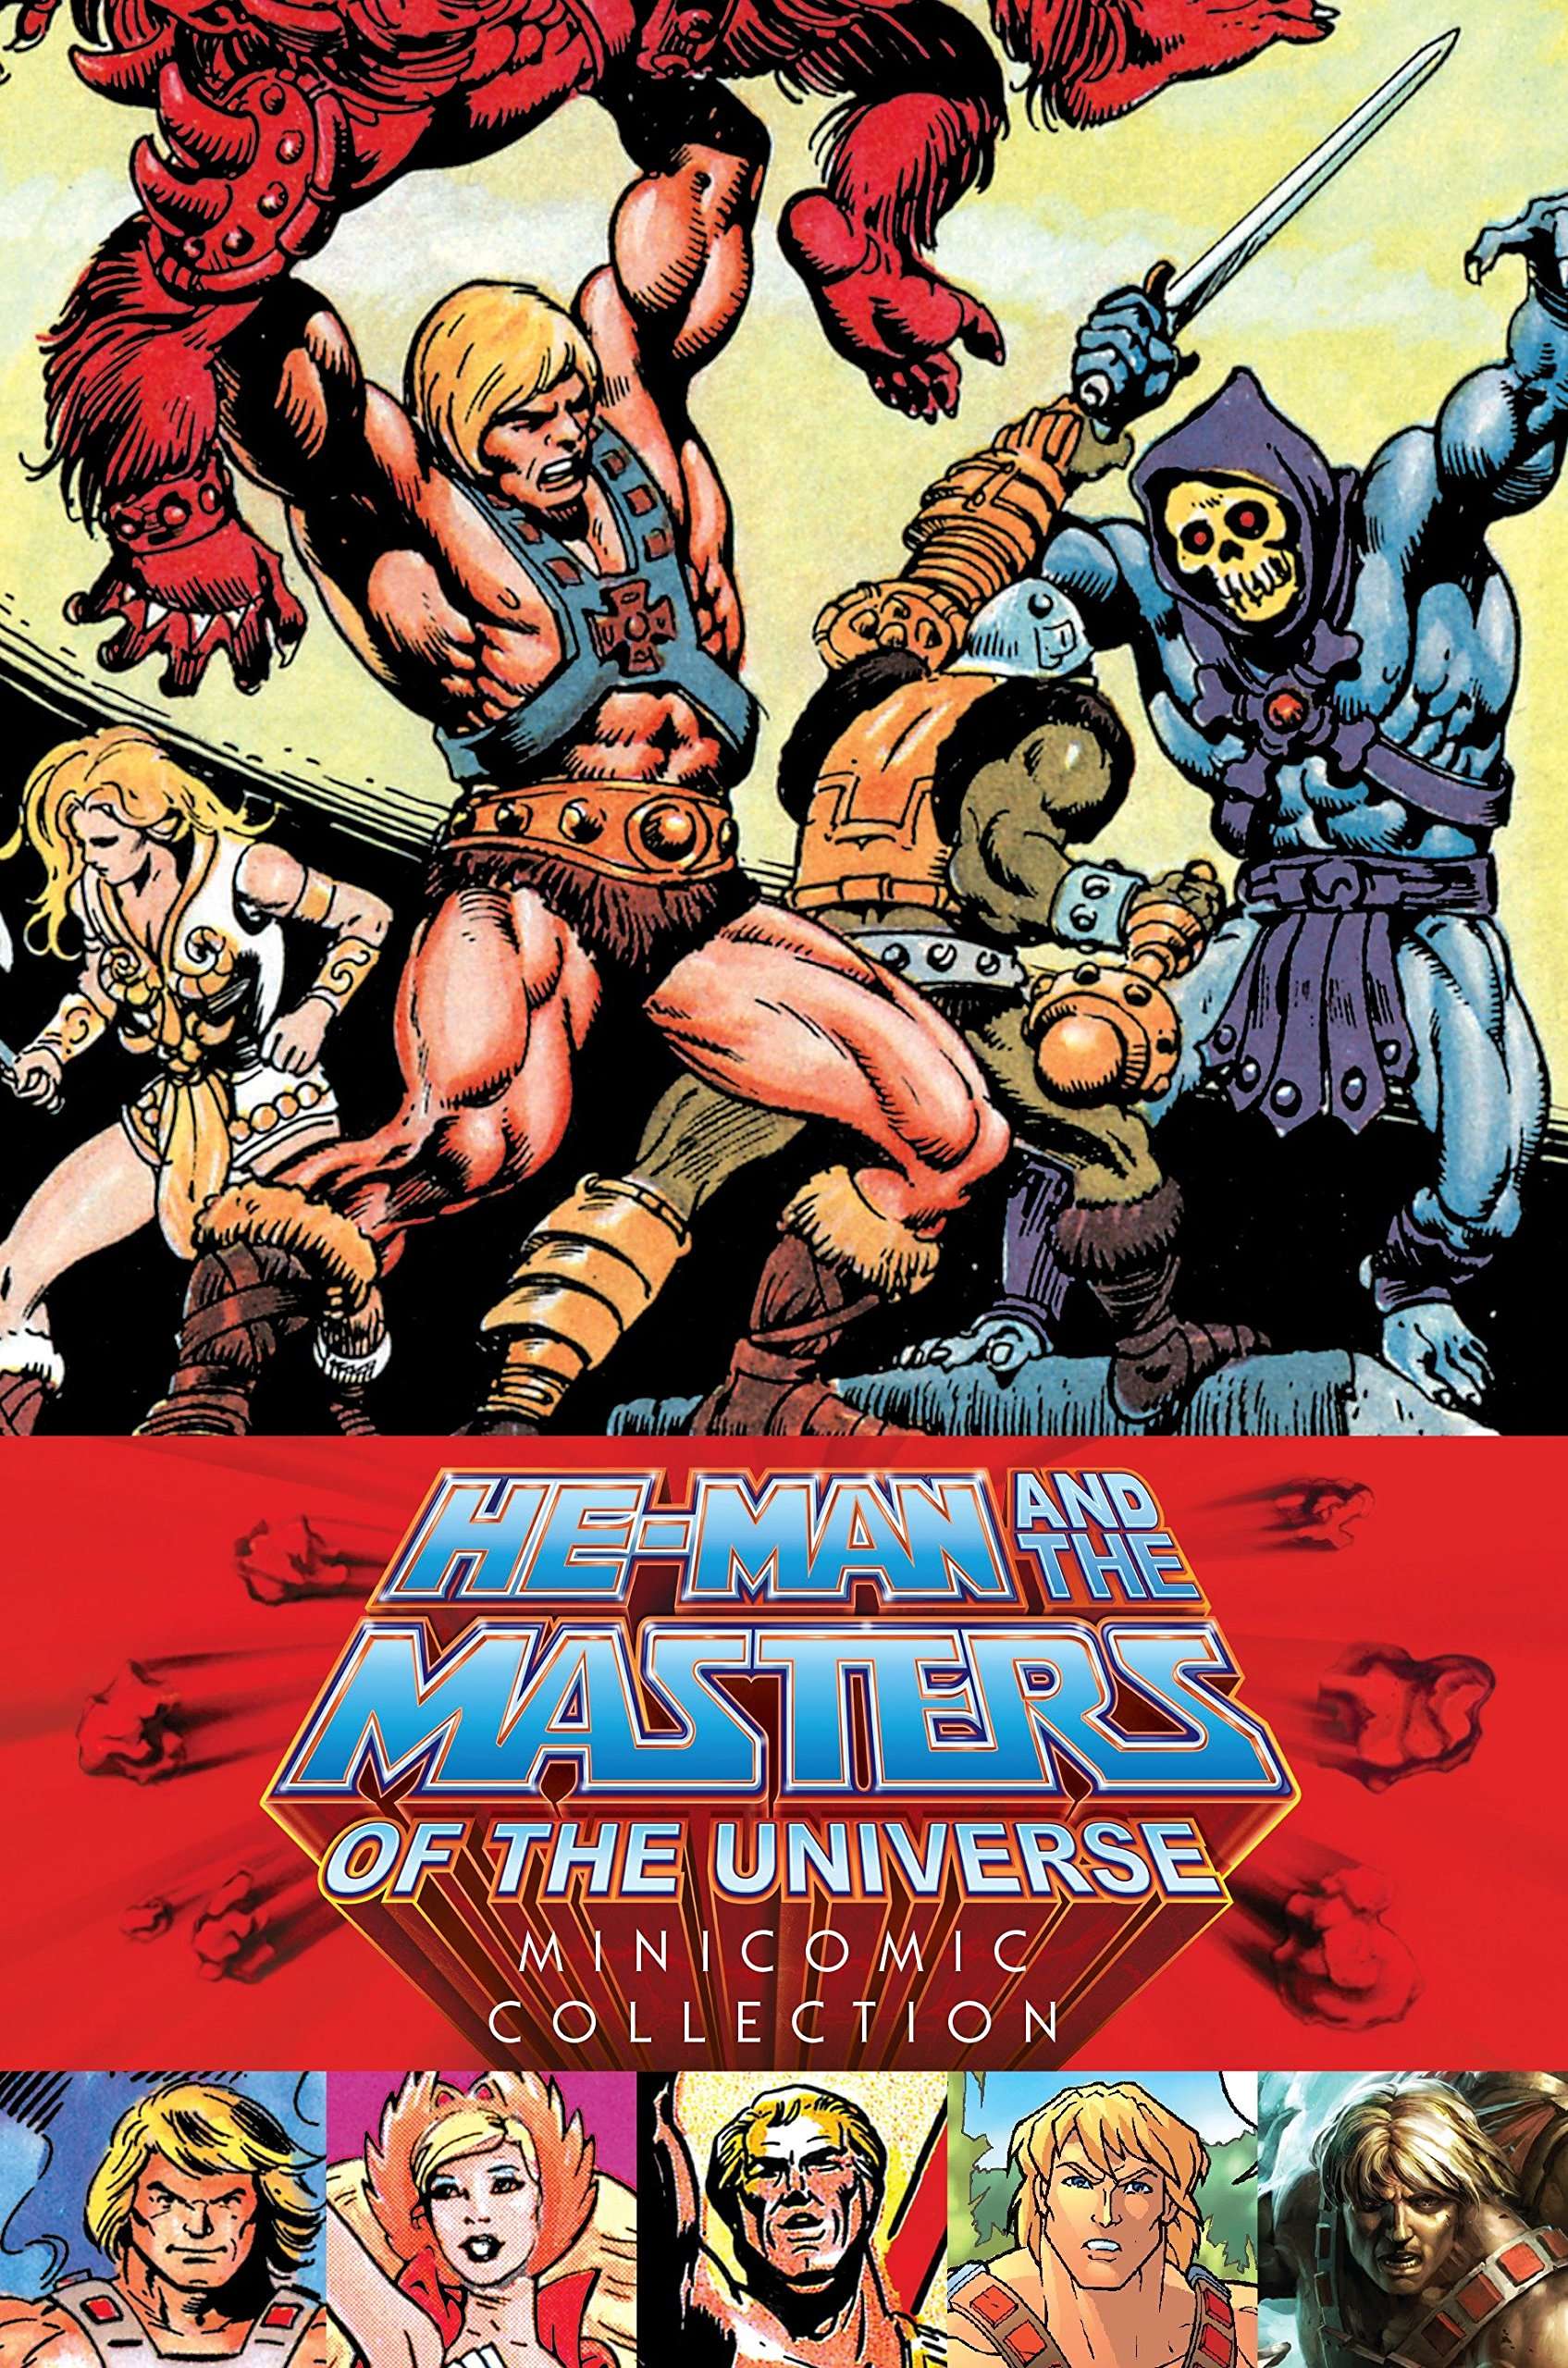 Masters of the Universe (Minicomics)